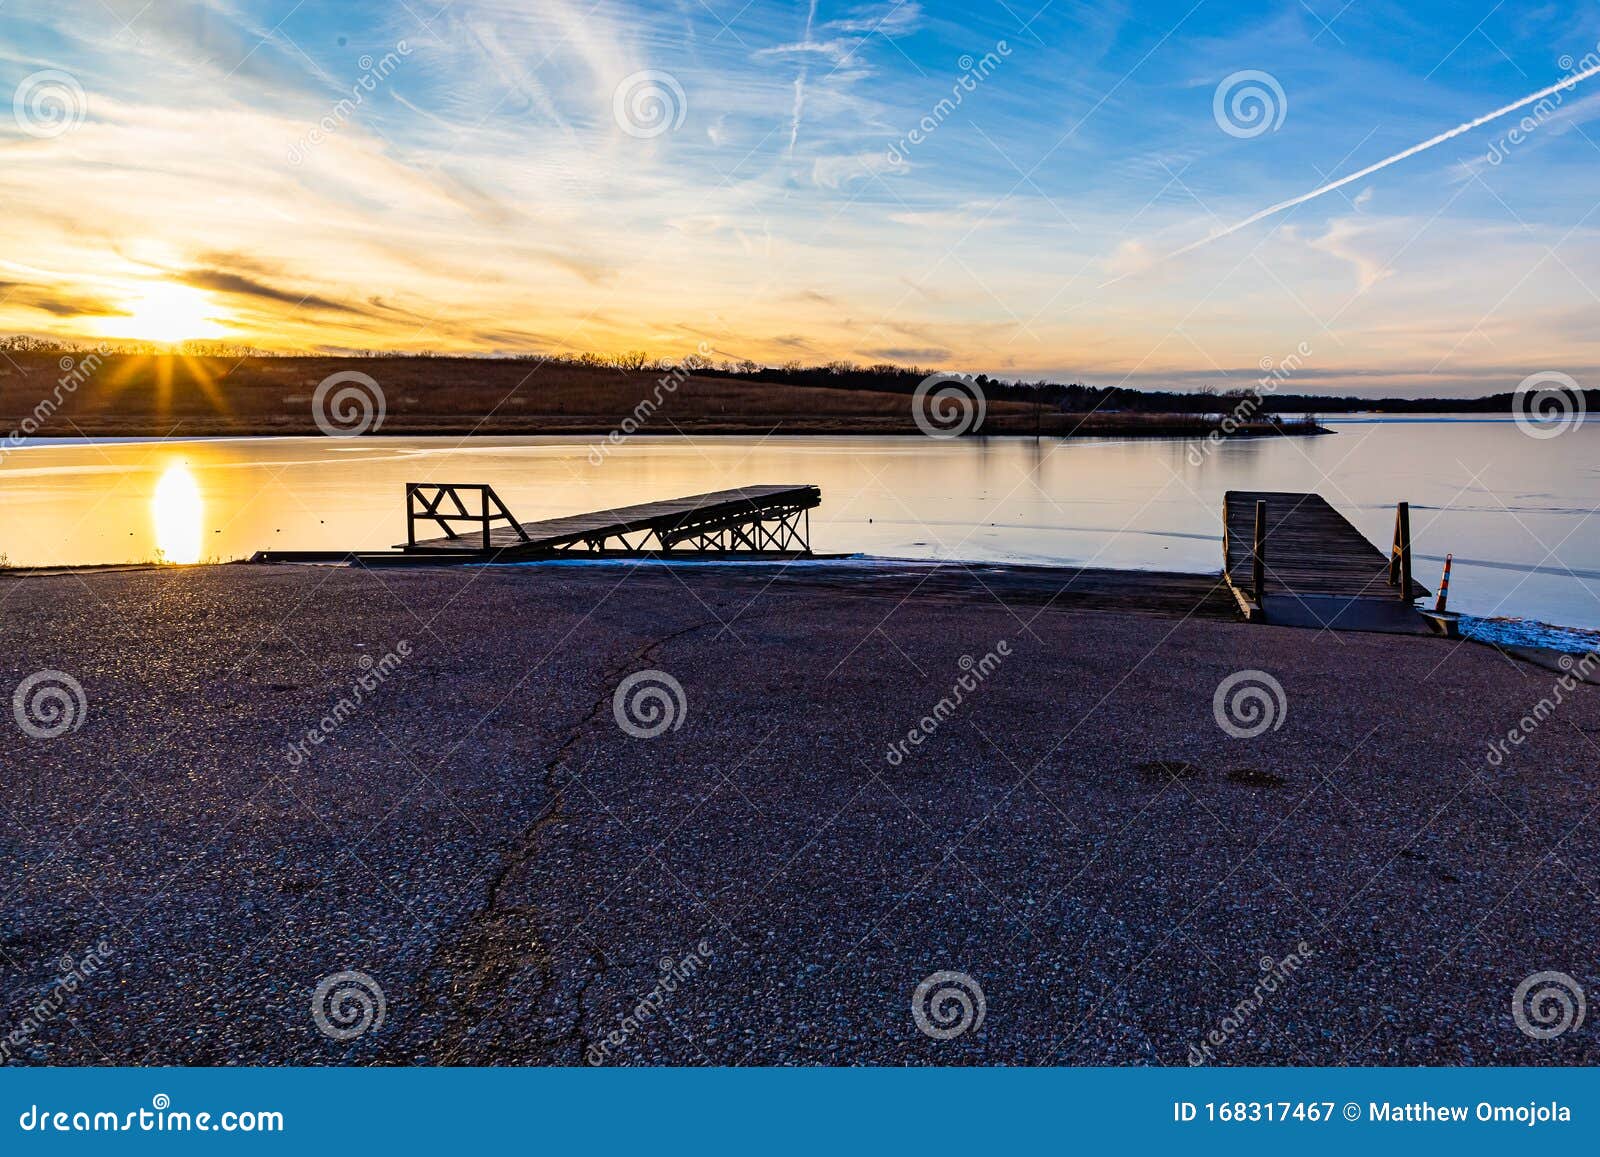 slipway or boat ramp on ed zorinsky lake at sunset in